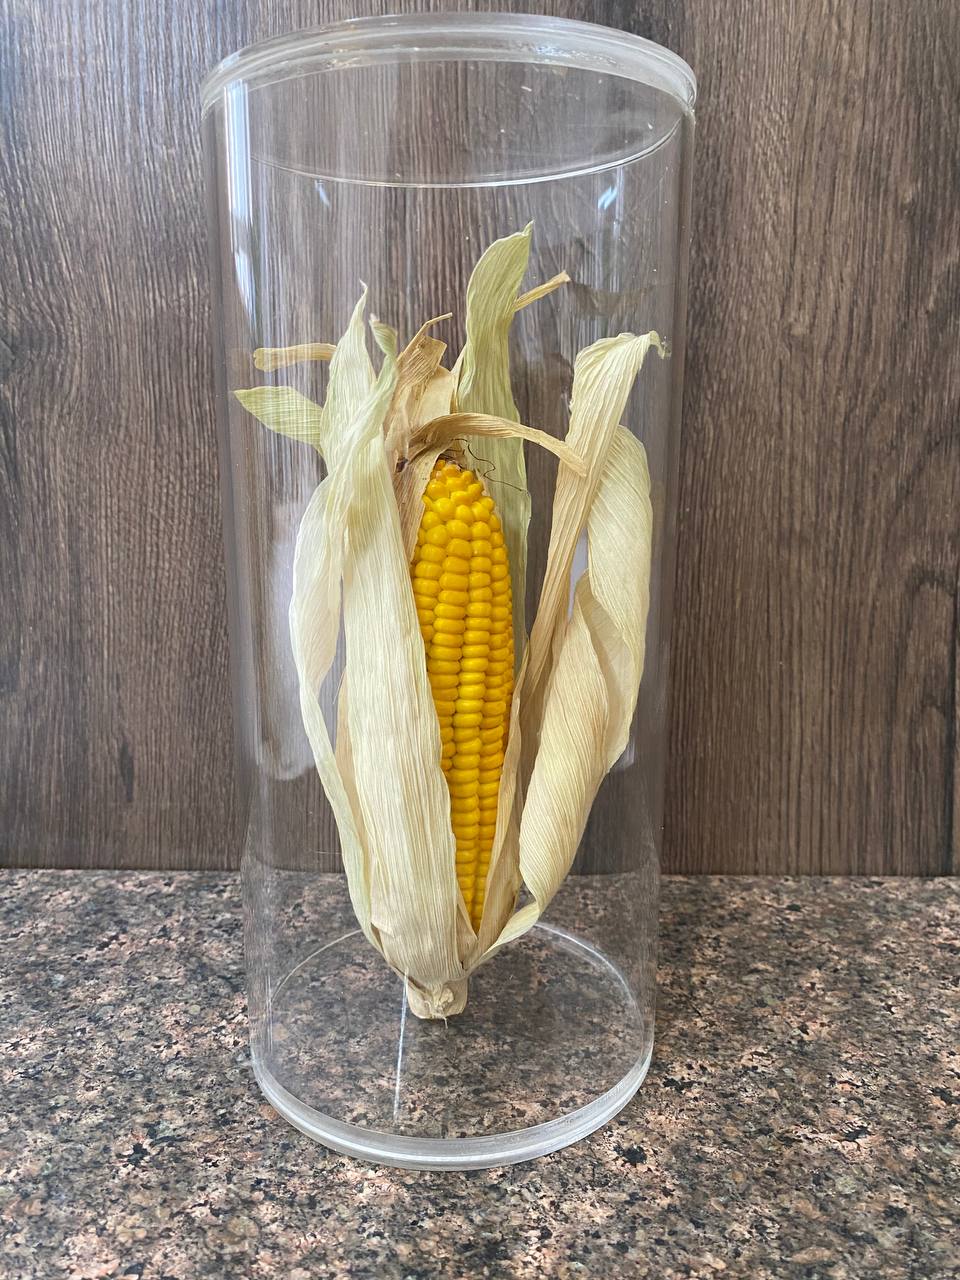 time capsule with corn replica